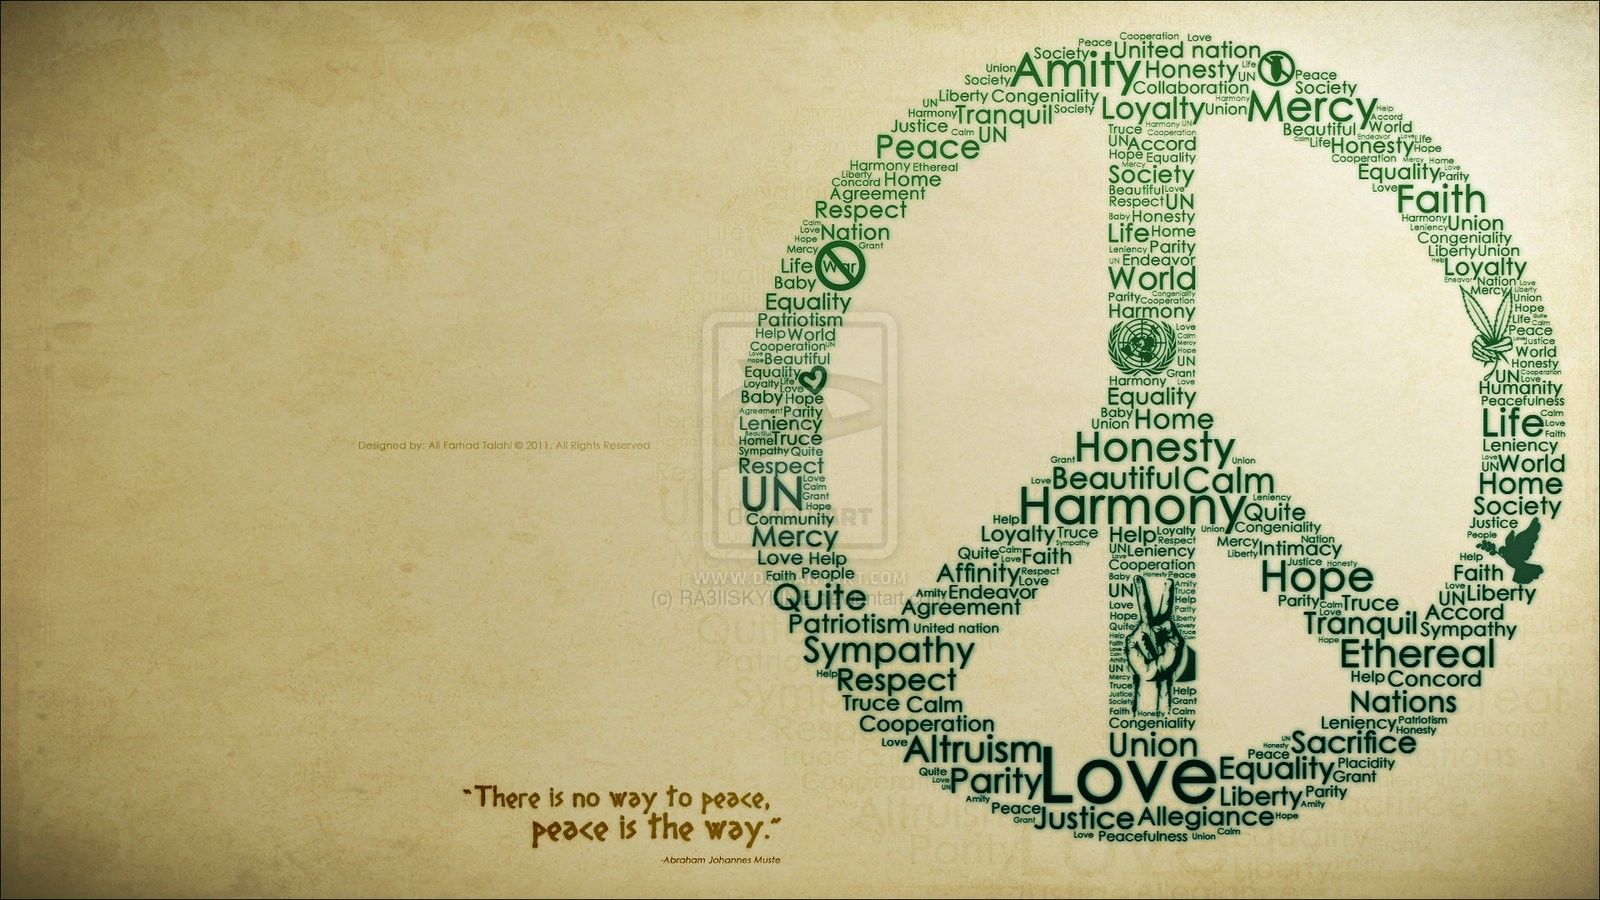 Peace HD Wallpaper